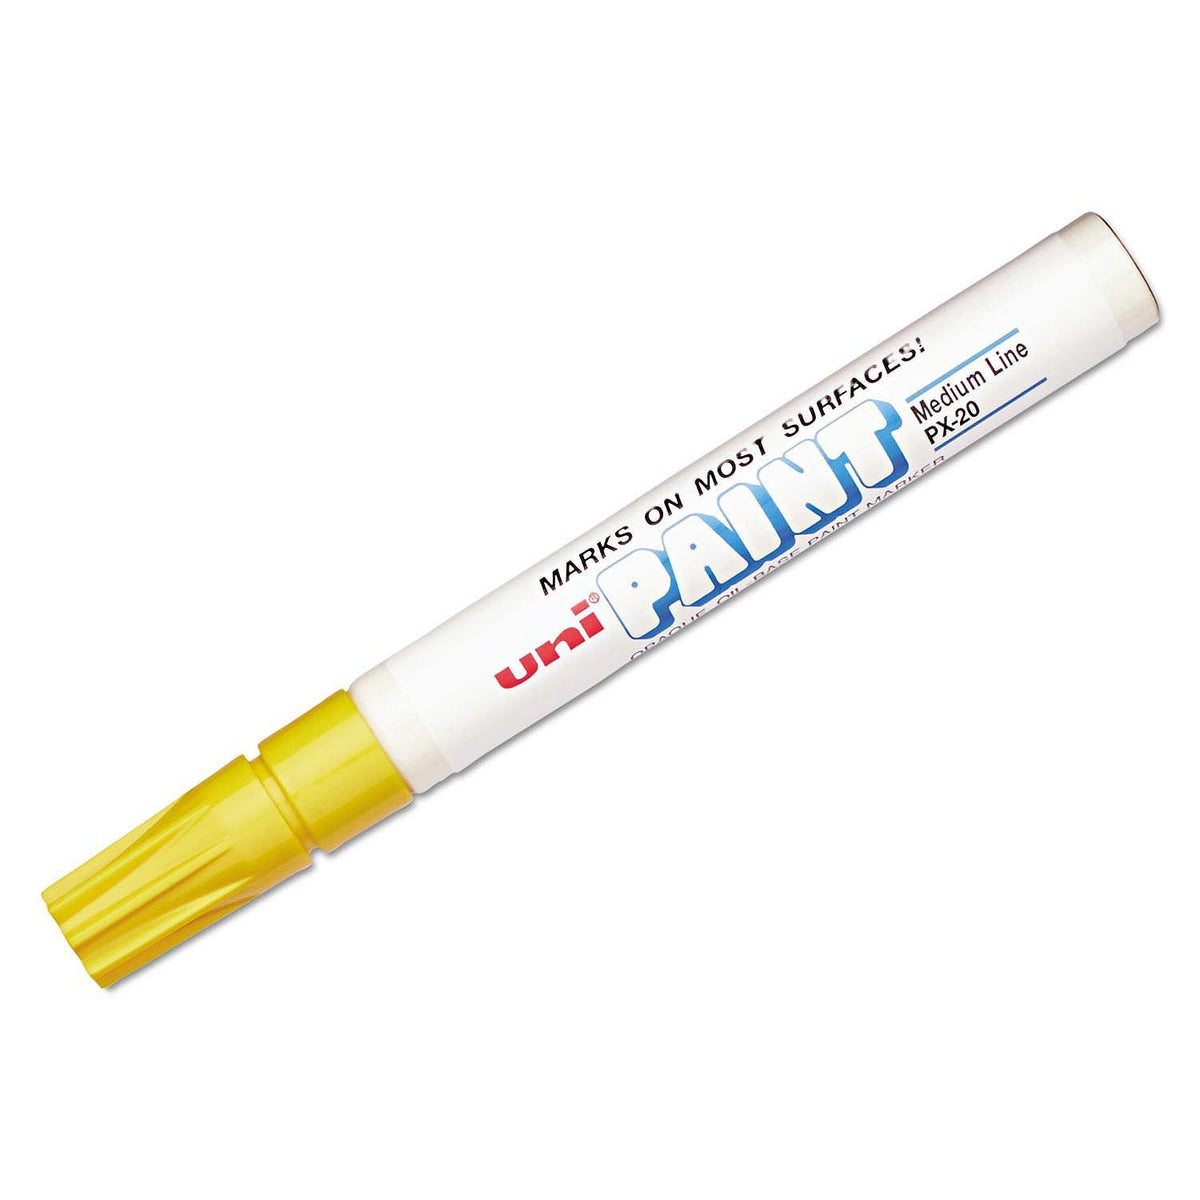 Uni-Paint 63605 Medium Point PX-20 Opaque Oil-Base Paint Marker, Yellow